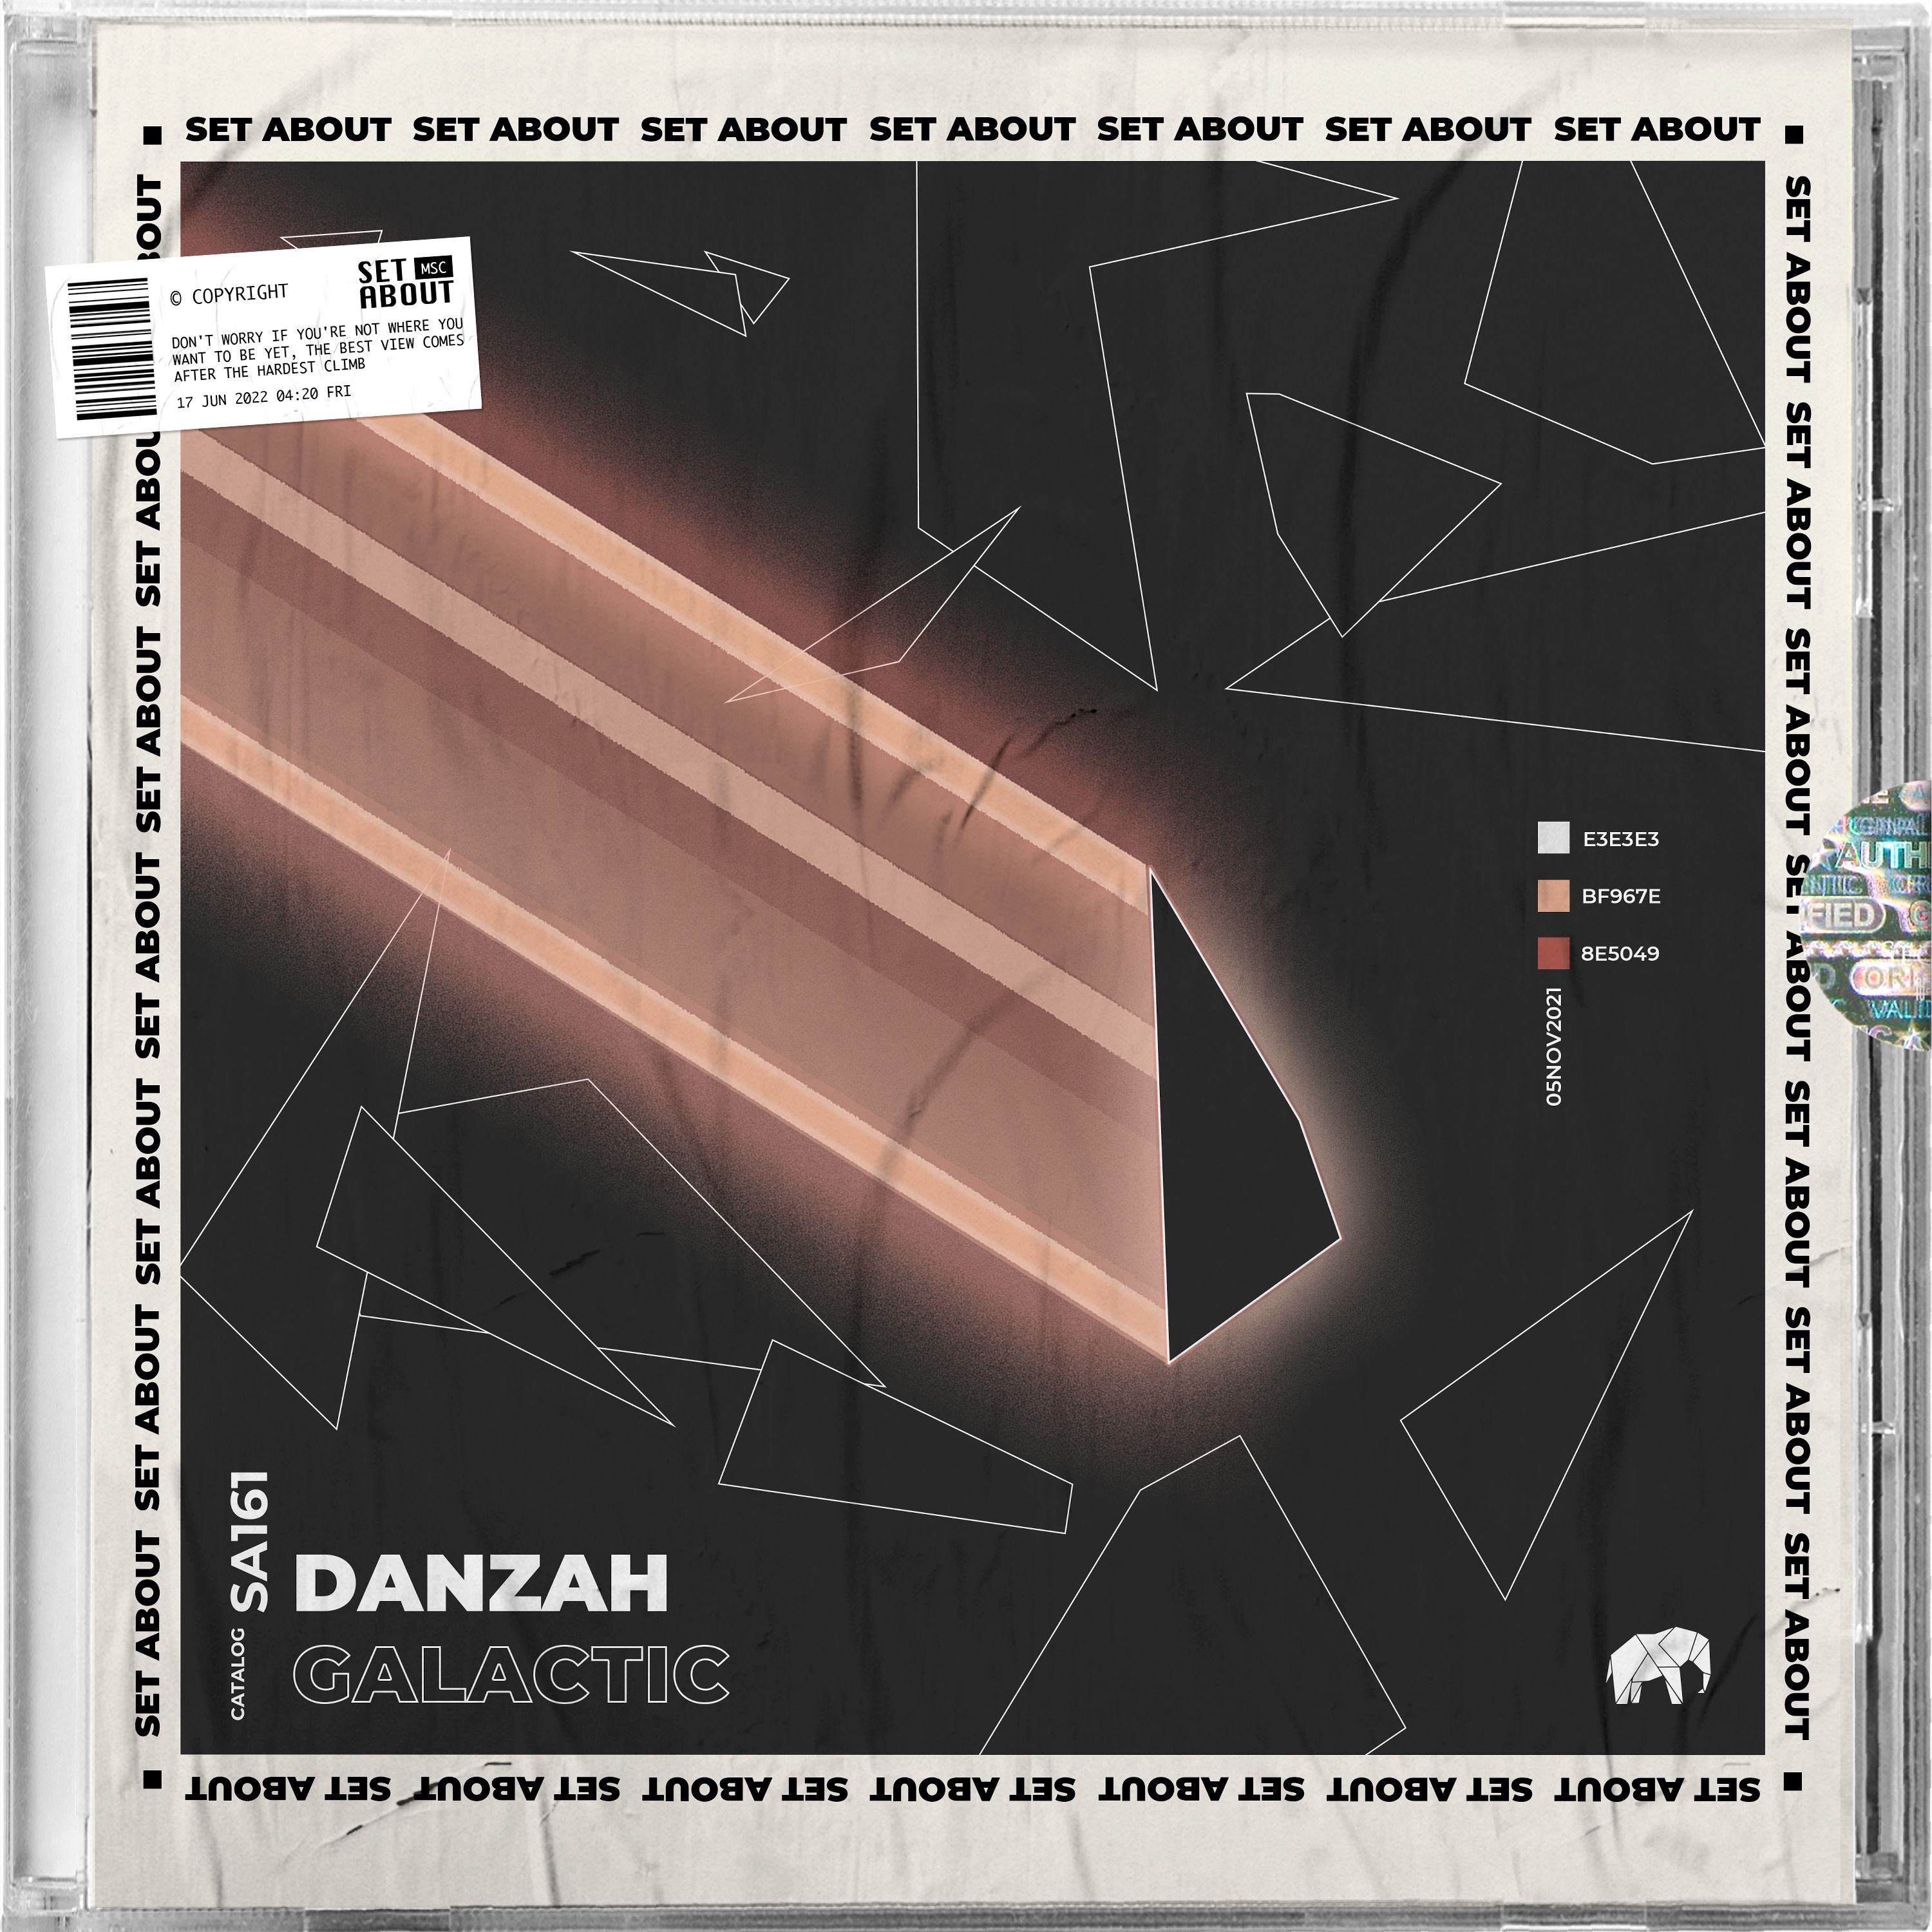 Budata PREMIERE: DANZAH - Galactic (Original Mix) [Set About]